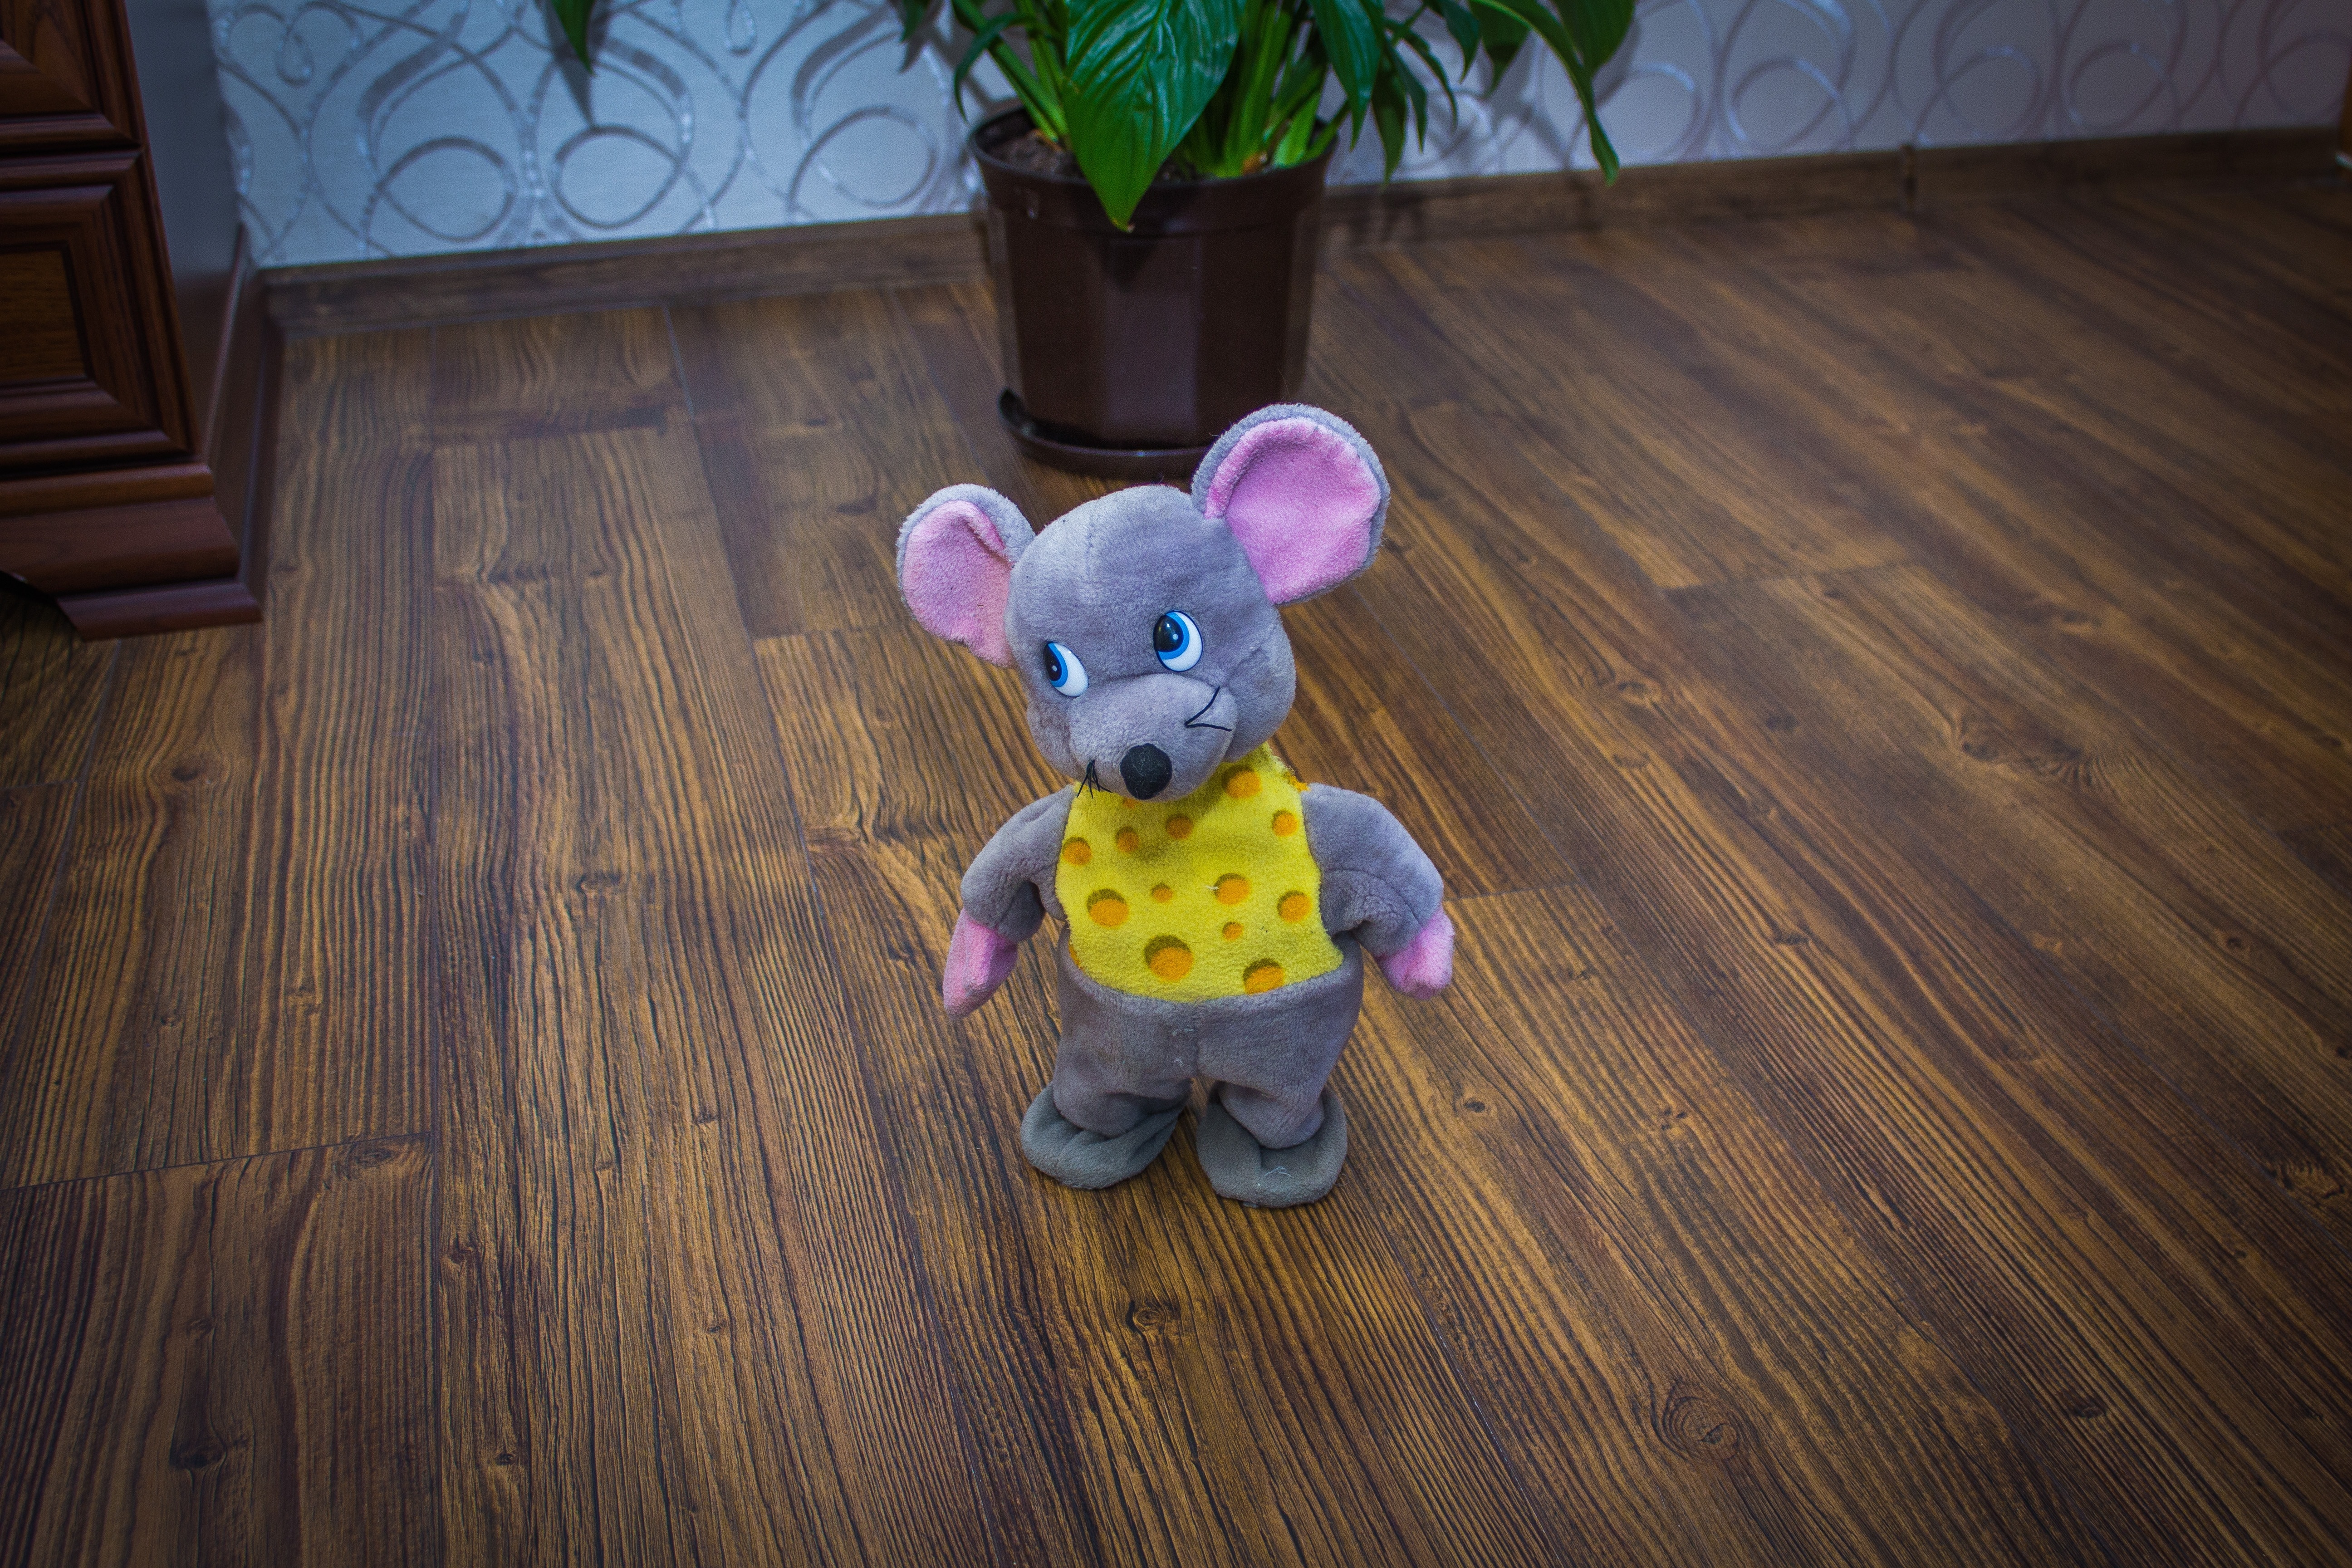 gray and yellow rat plush toy